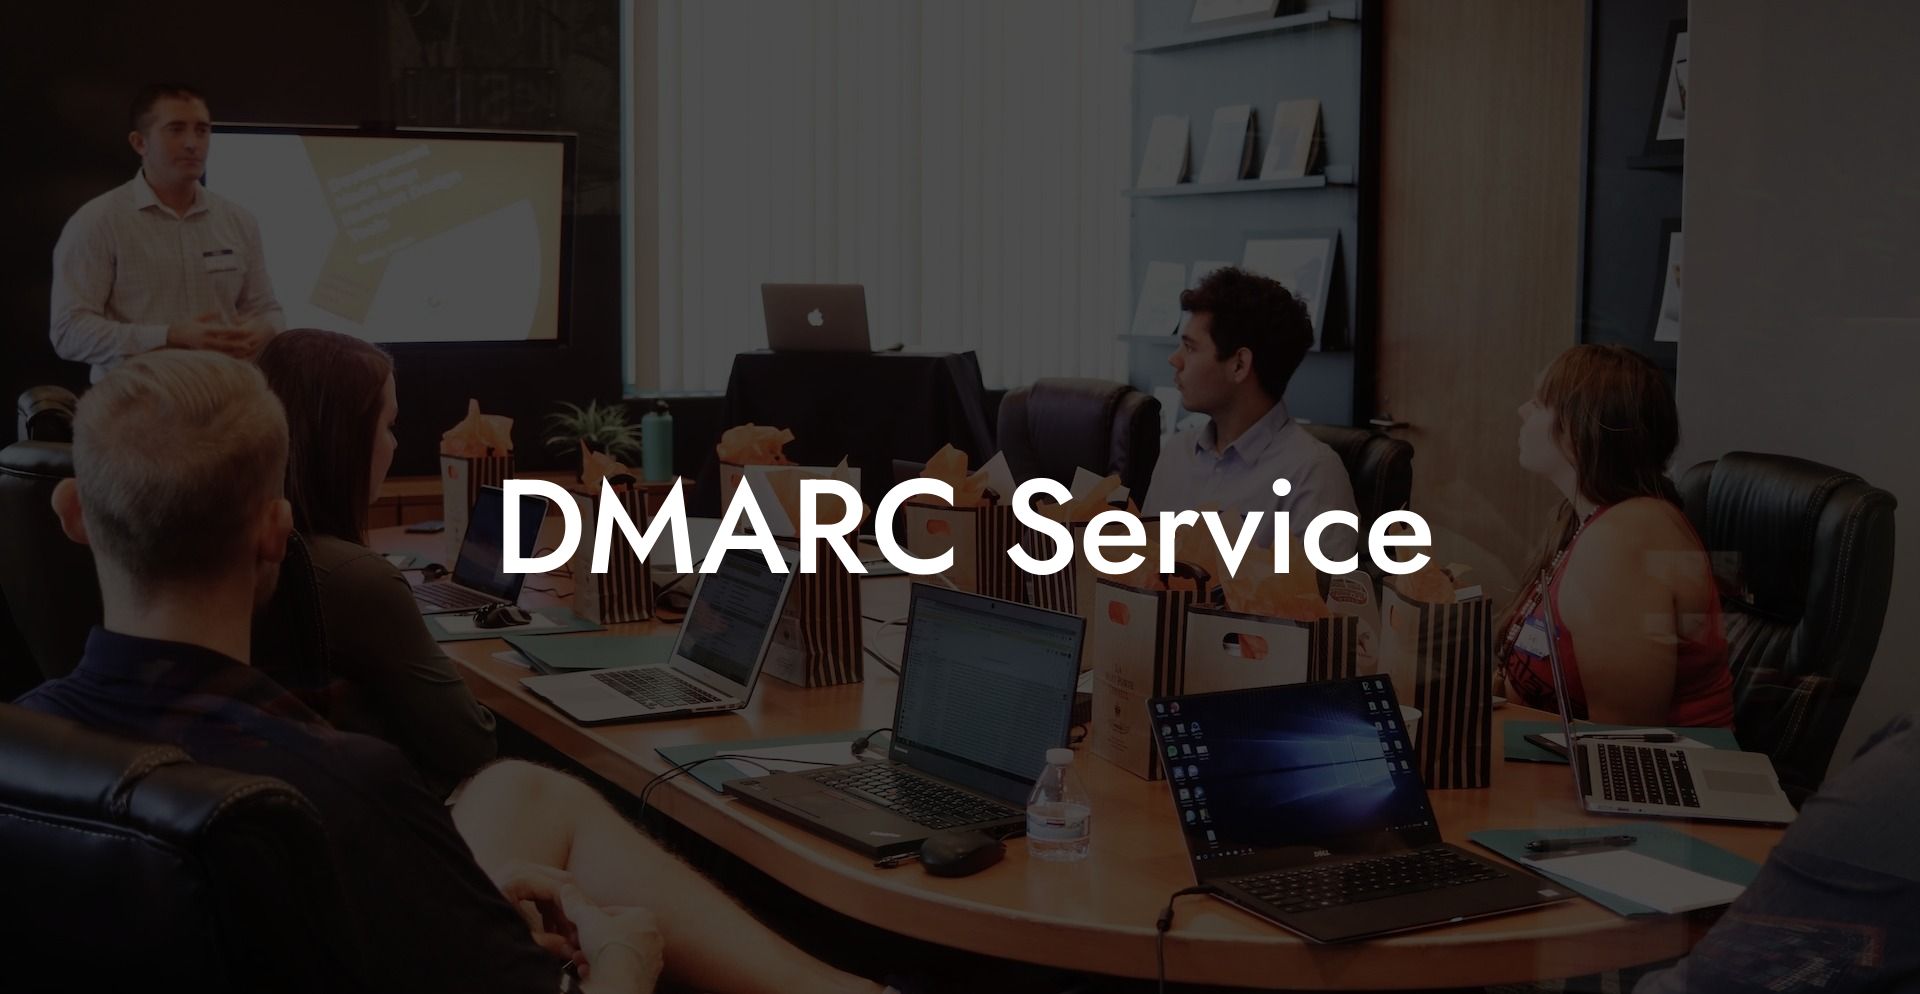 DMARC Service